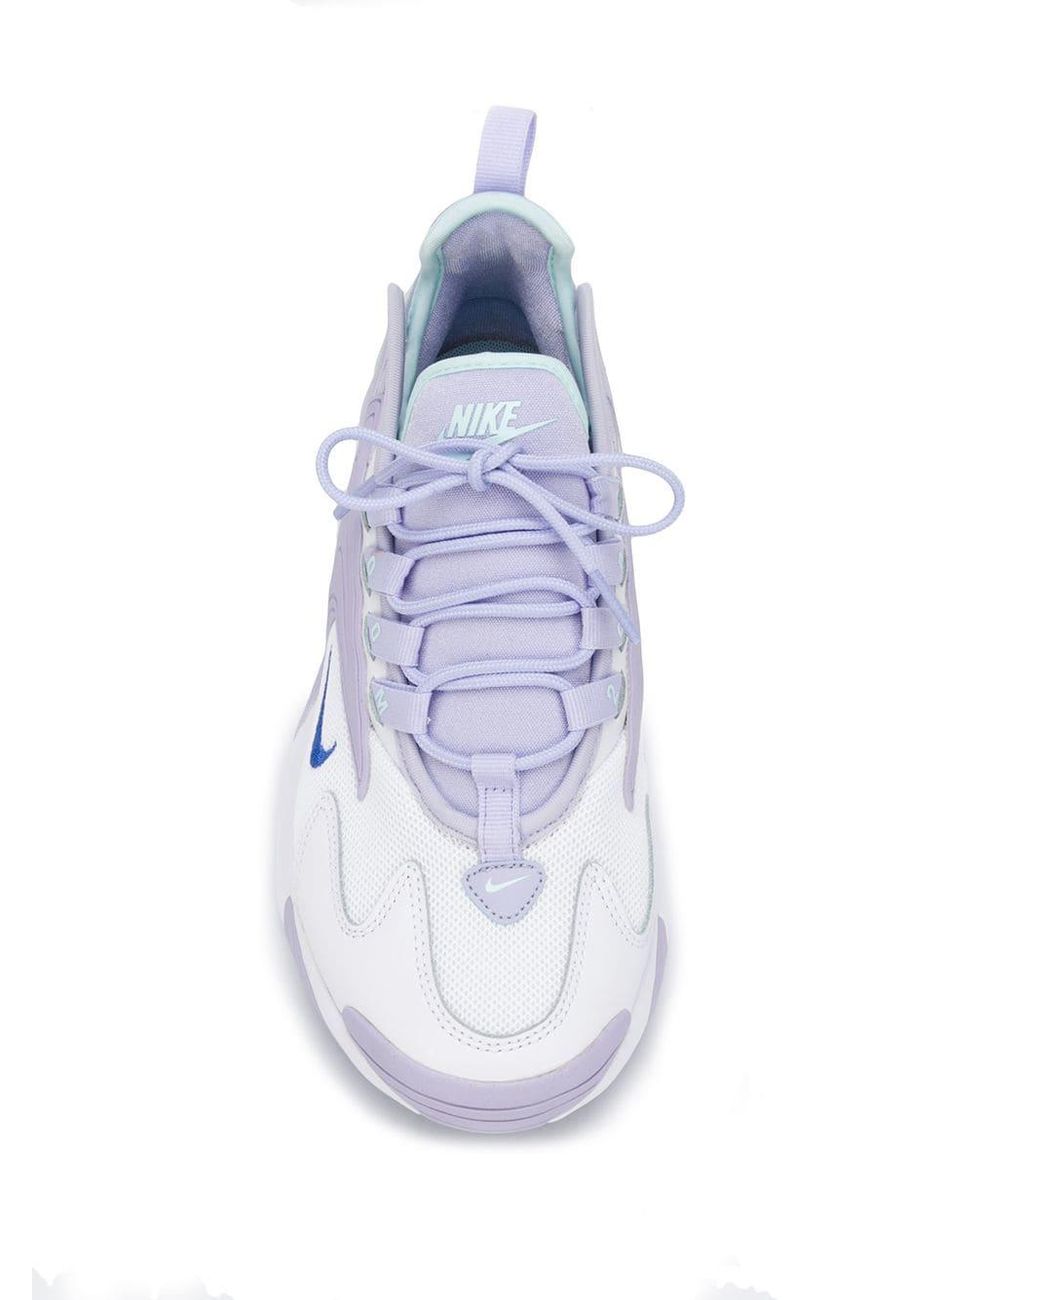 Nike Leather Lilac Zoom 2k Sneakers in Purple | Lyst